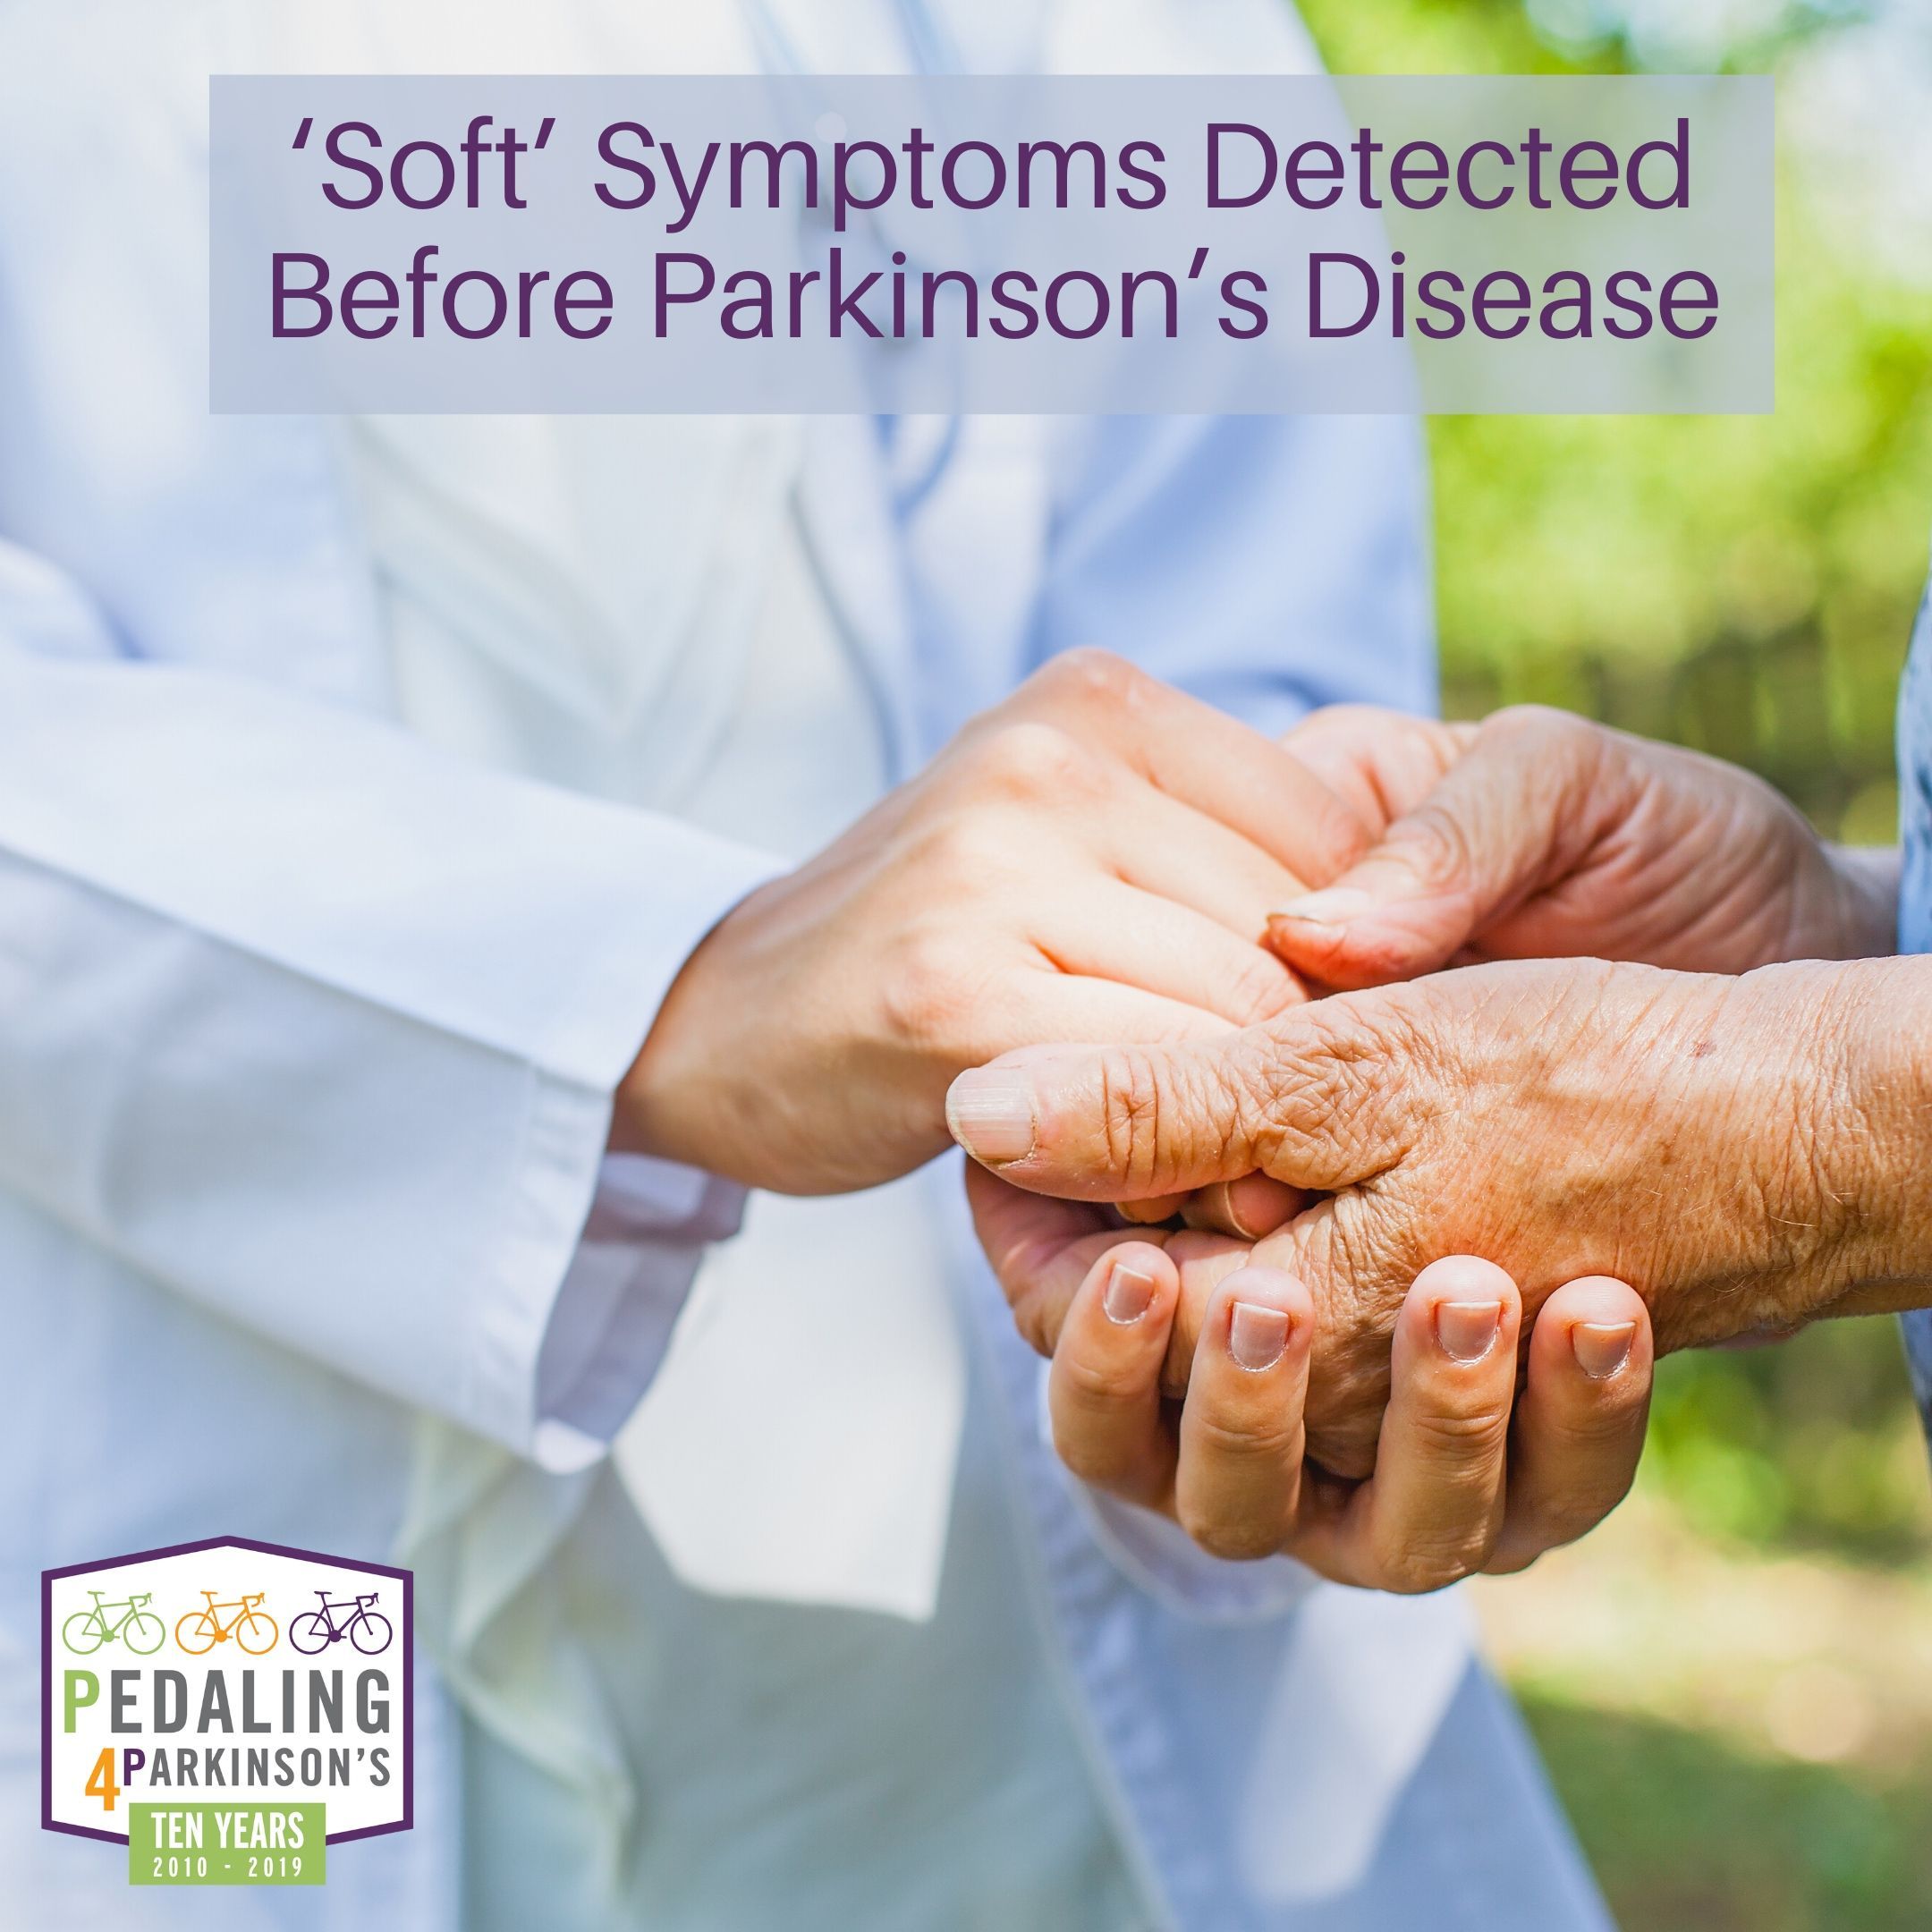 ‘Soft’ Symptoms Detected Before Parkinson’s Disease